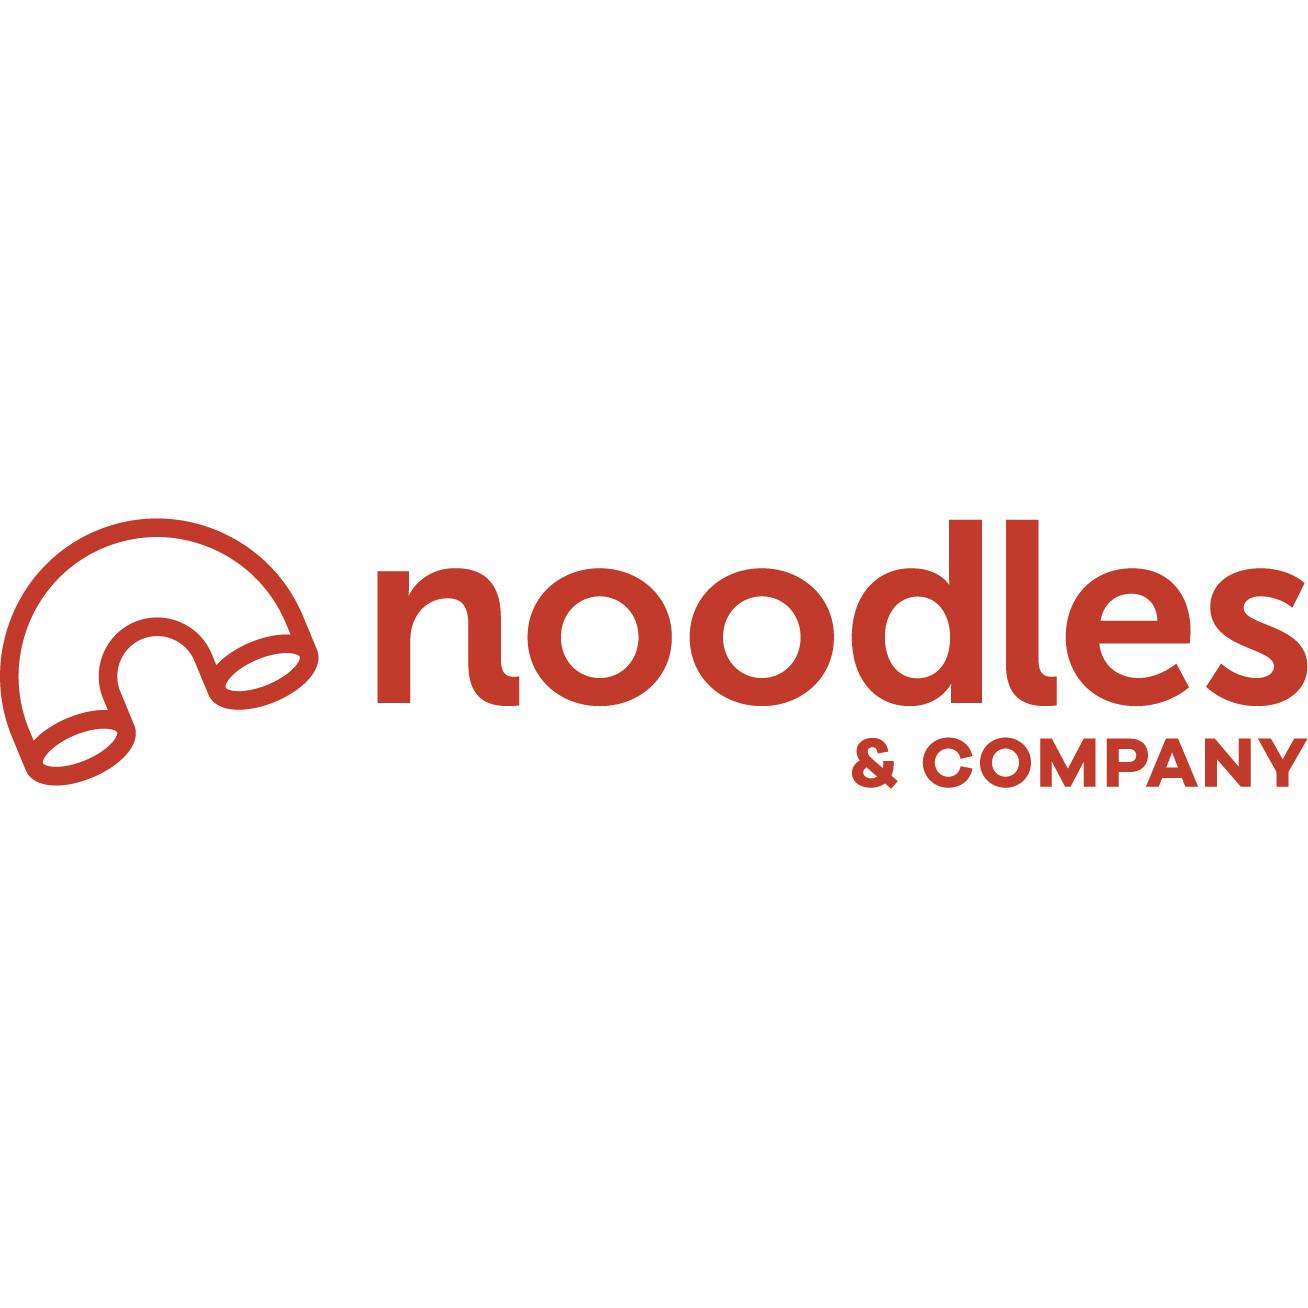 Noodles & Company - Monona Menu and Delivery in Monona WI, 53716